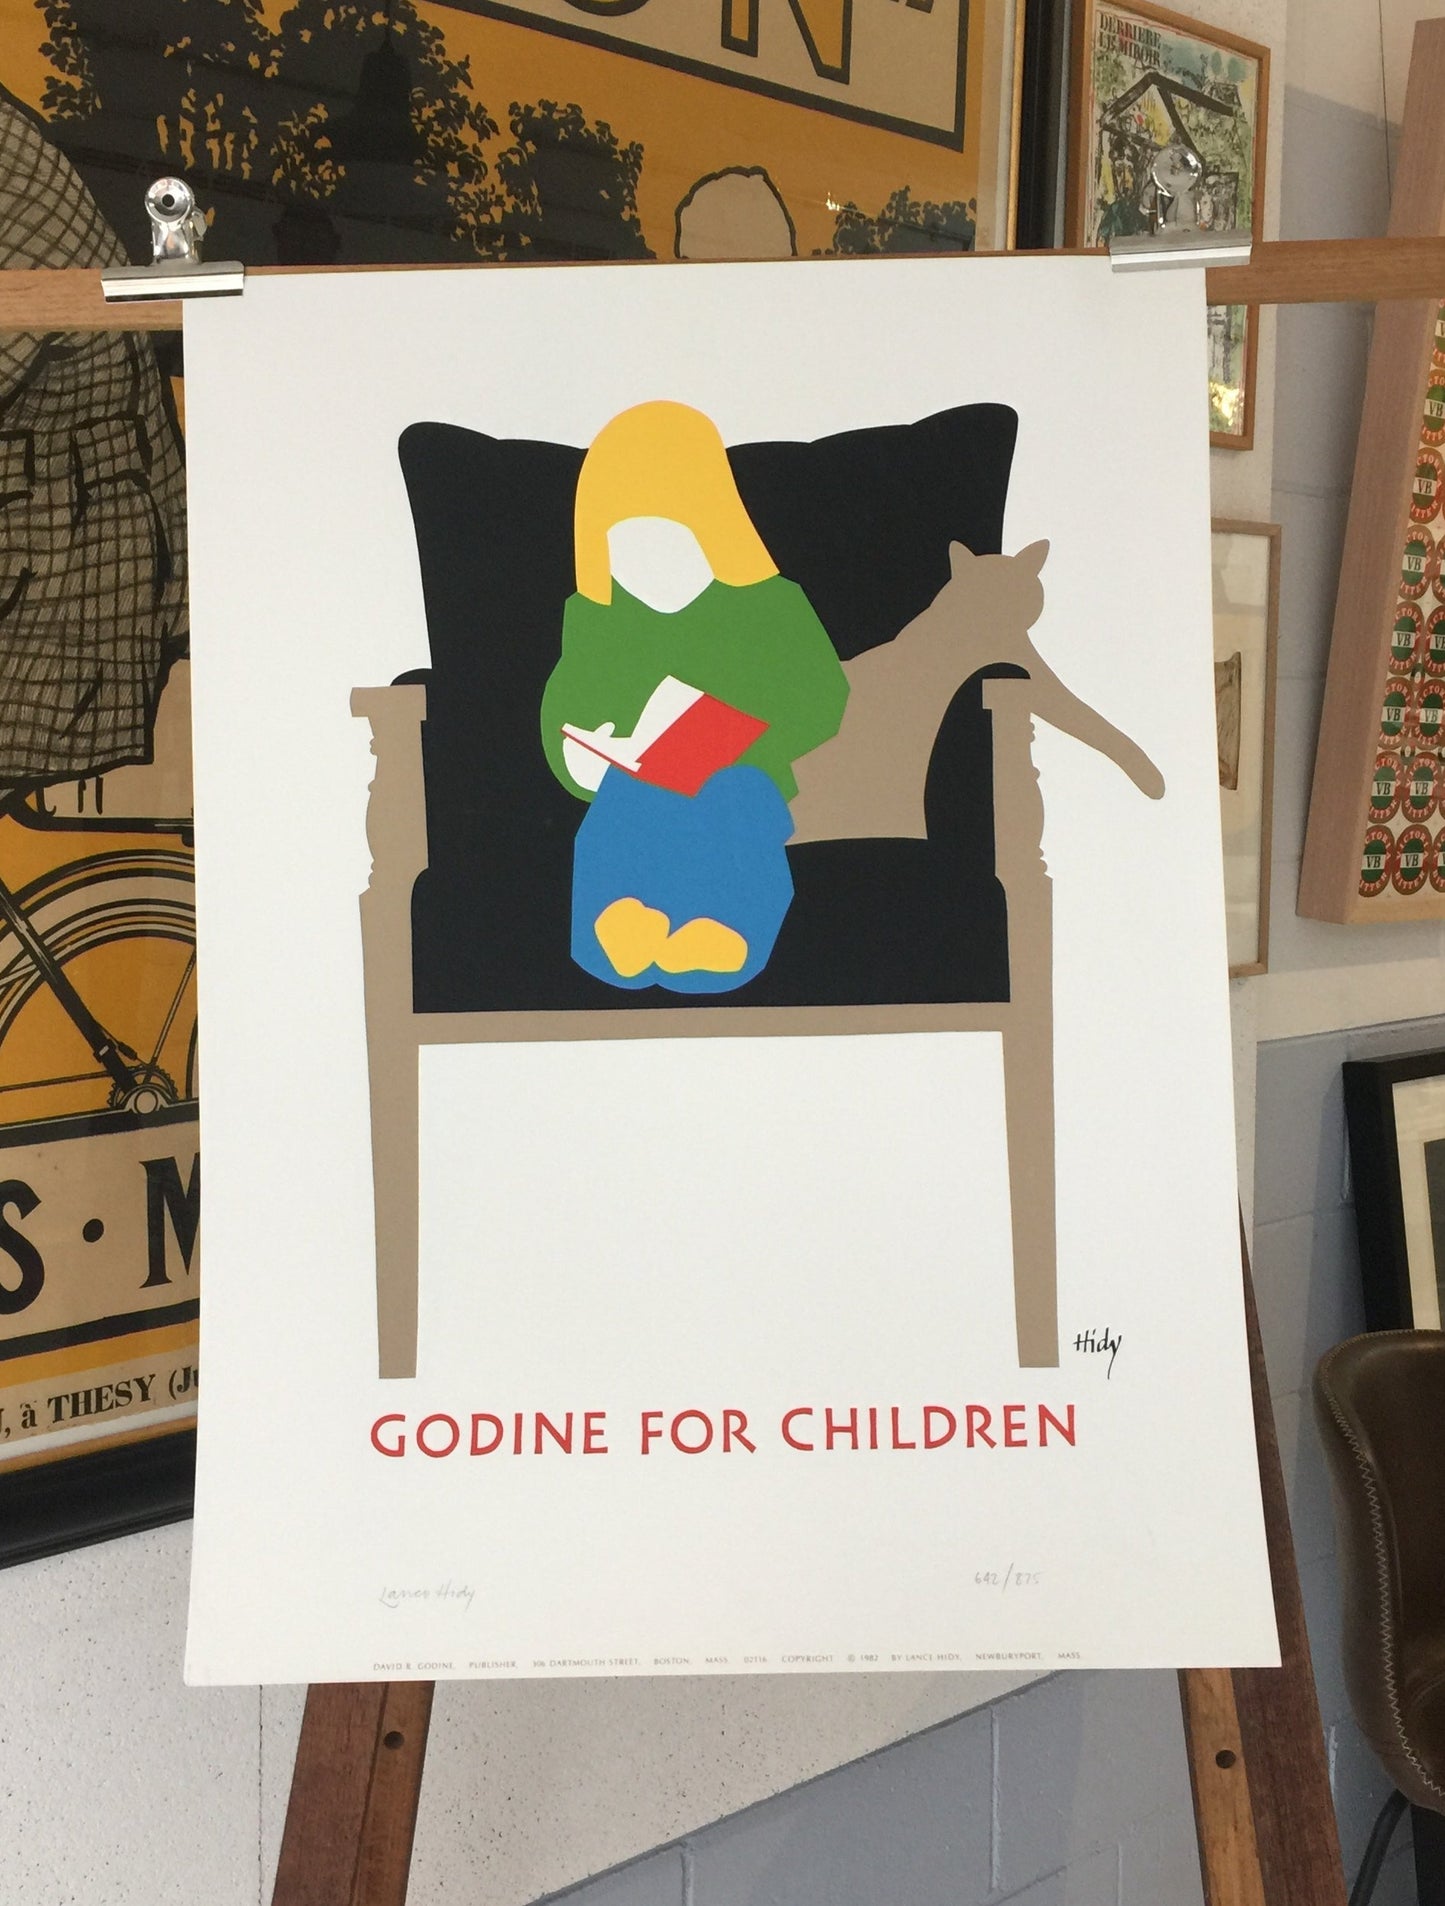 Godine for Children by Hidy